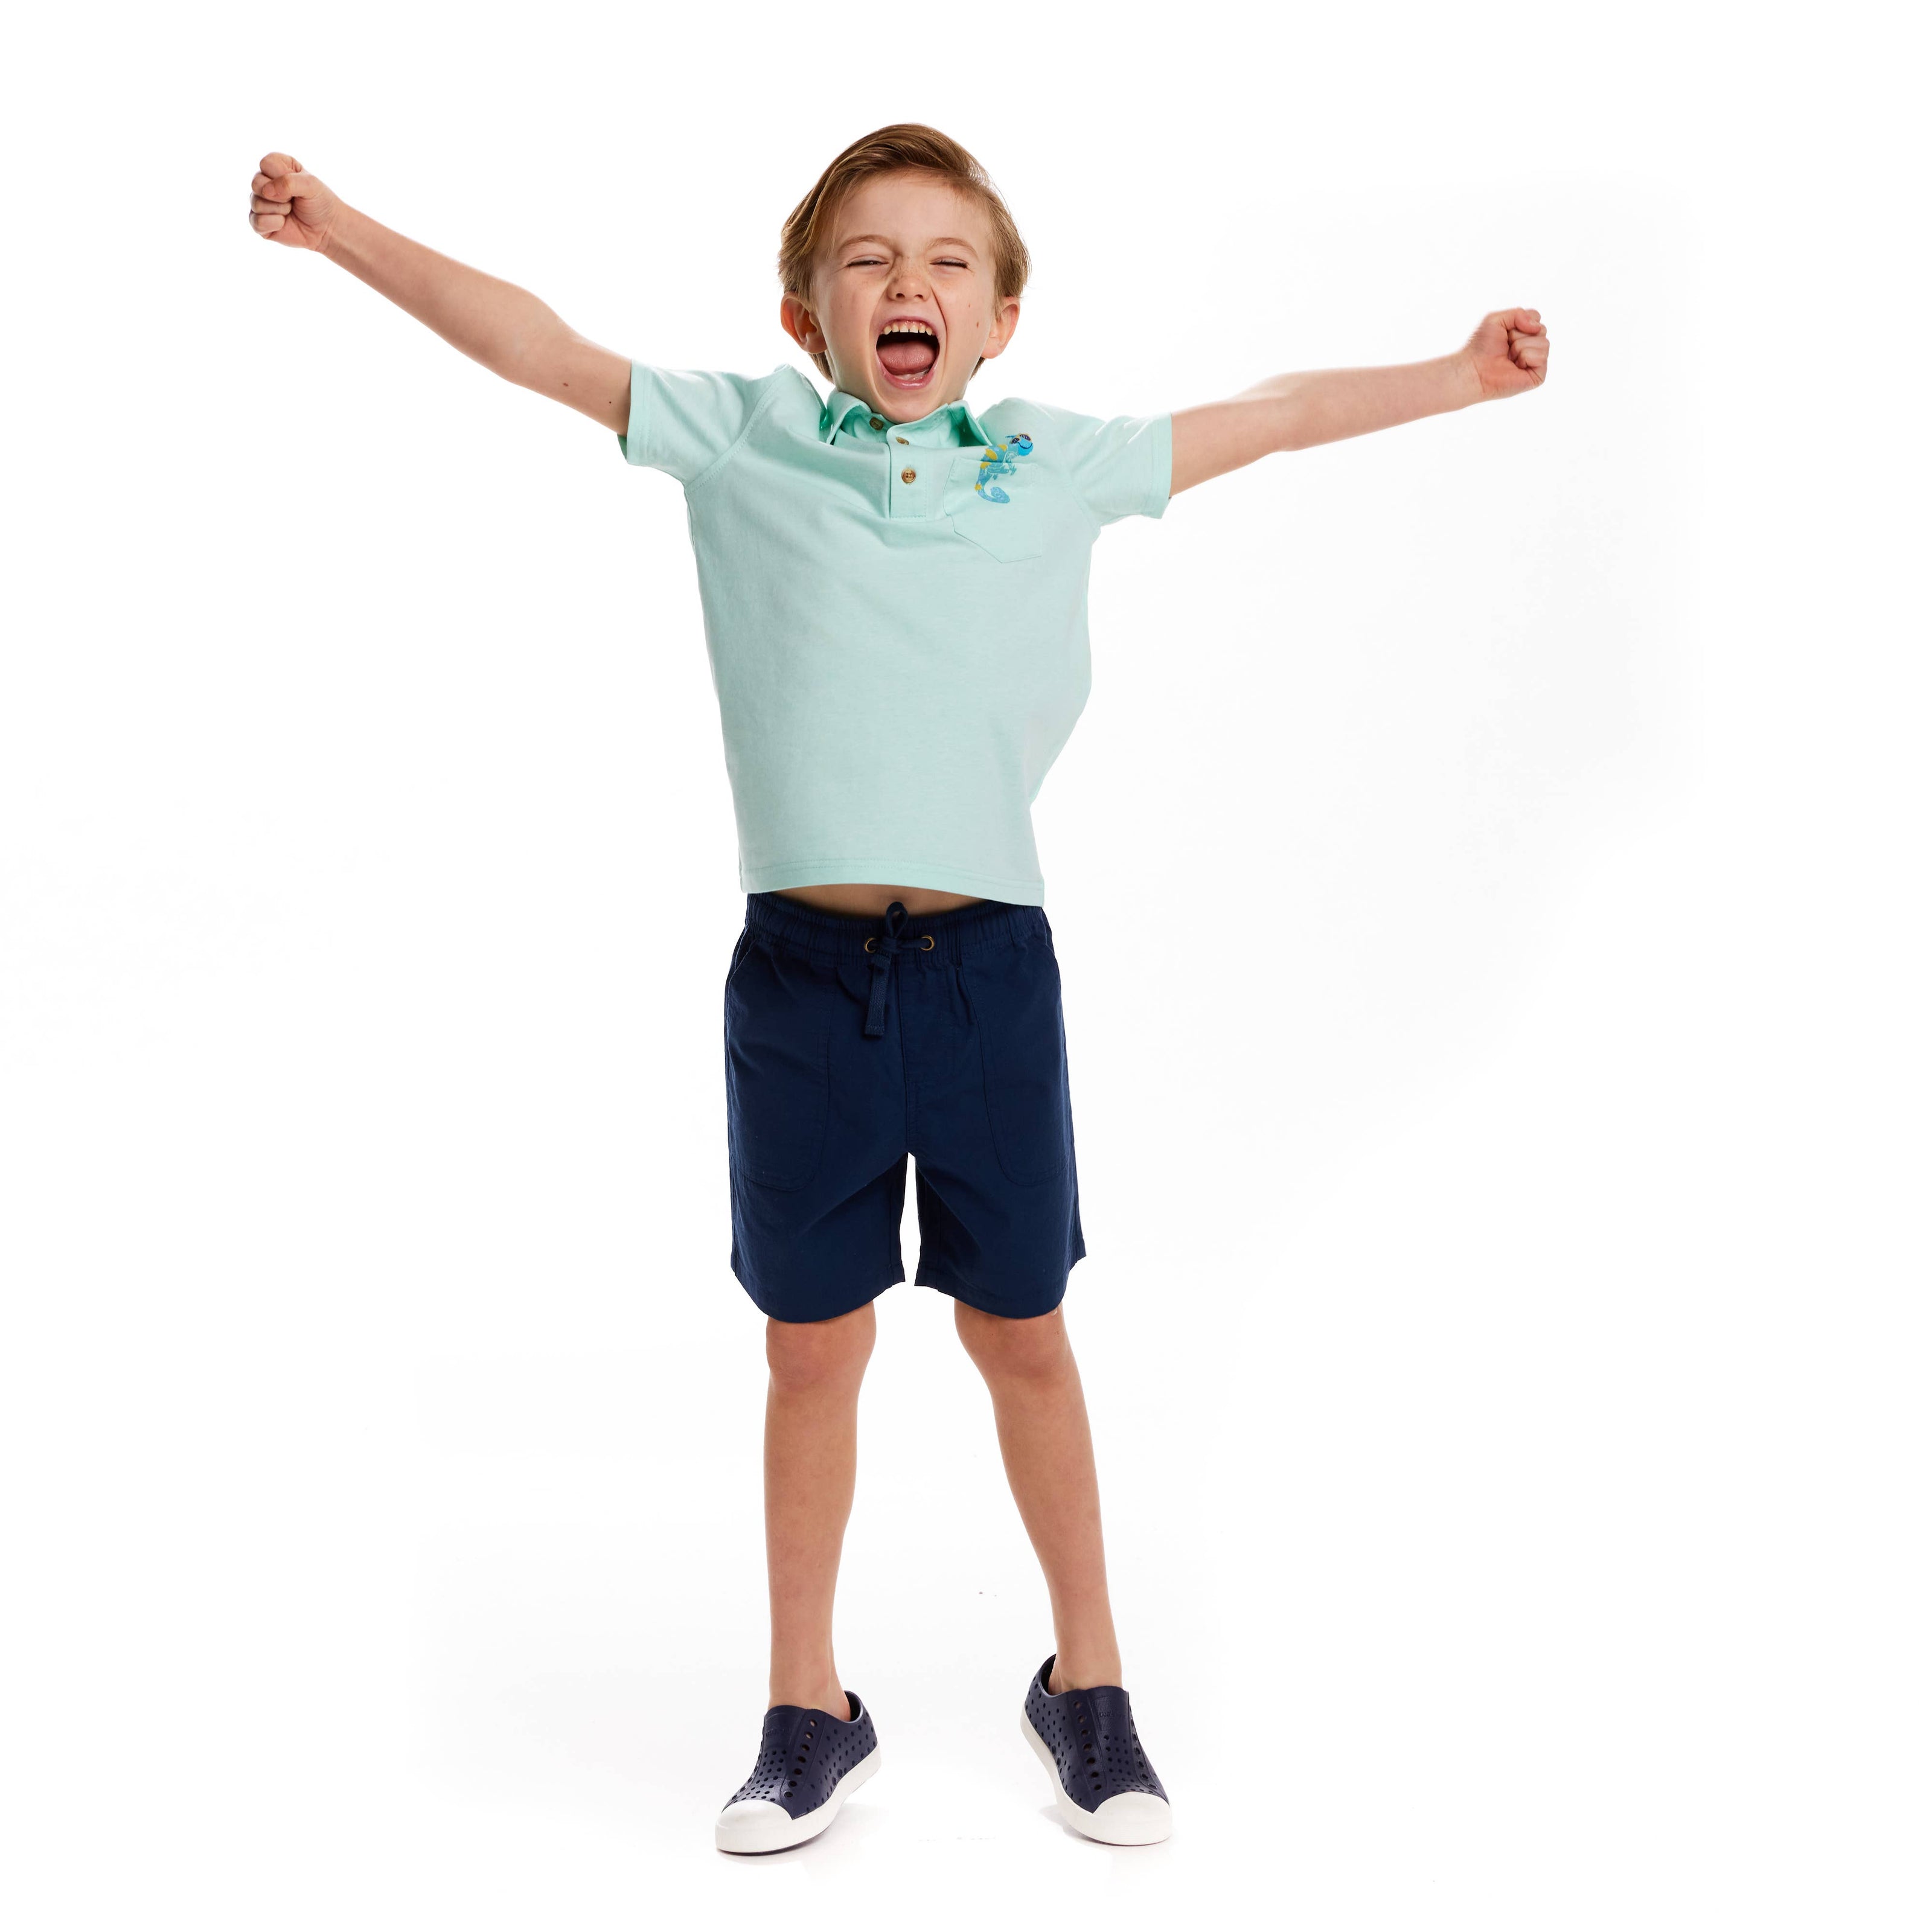 Boys Toddler Aqua Chameleon Playful Pocket Polo Shirt